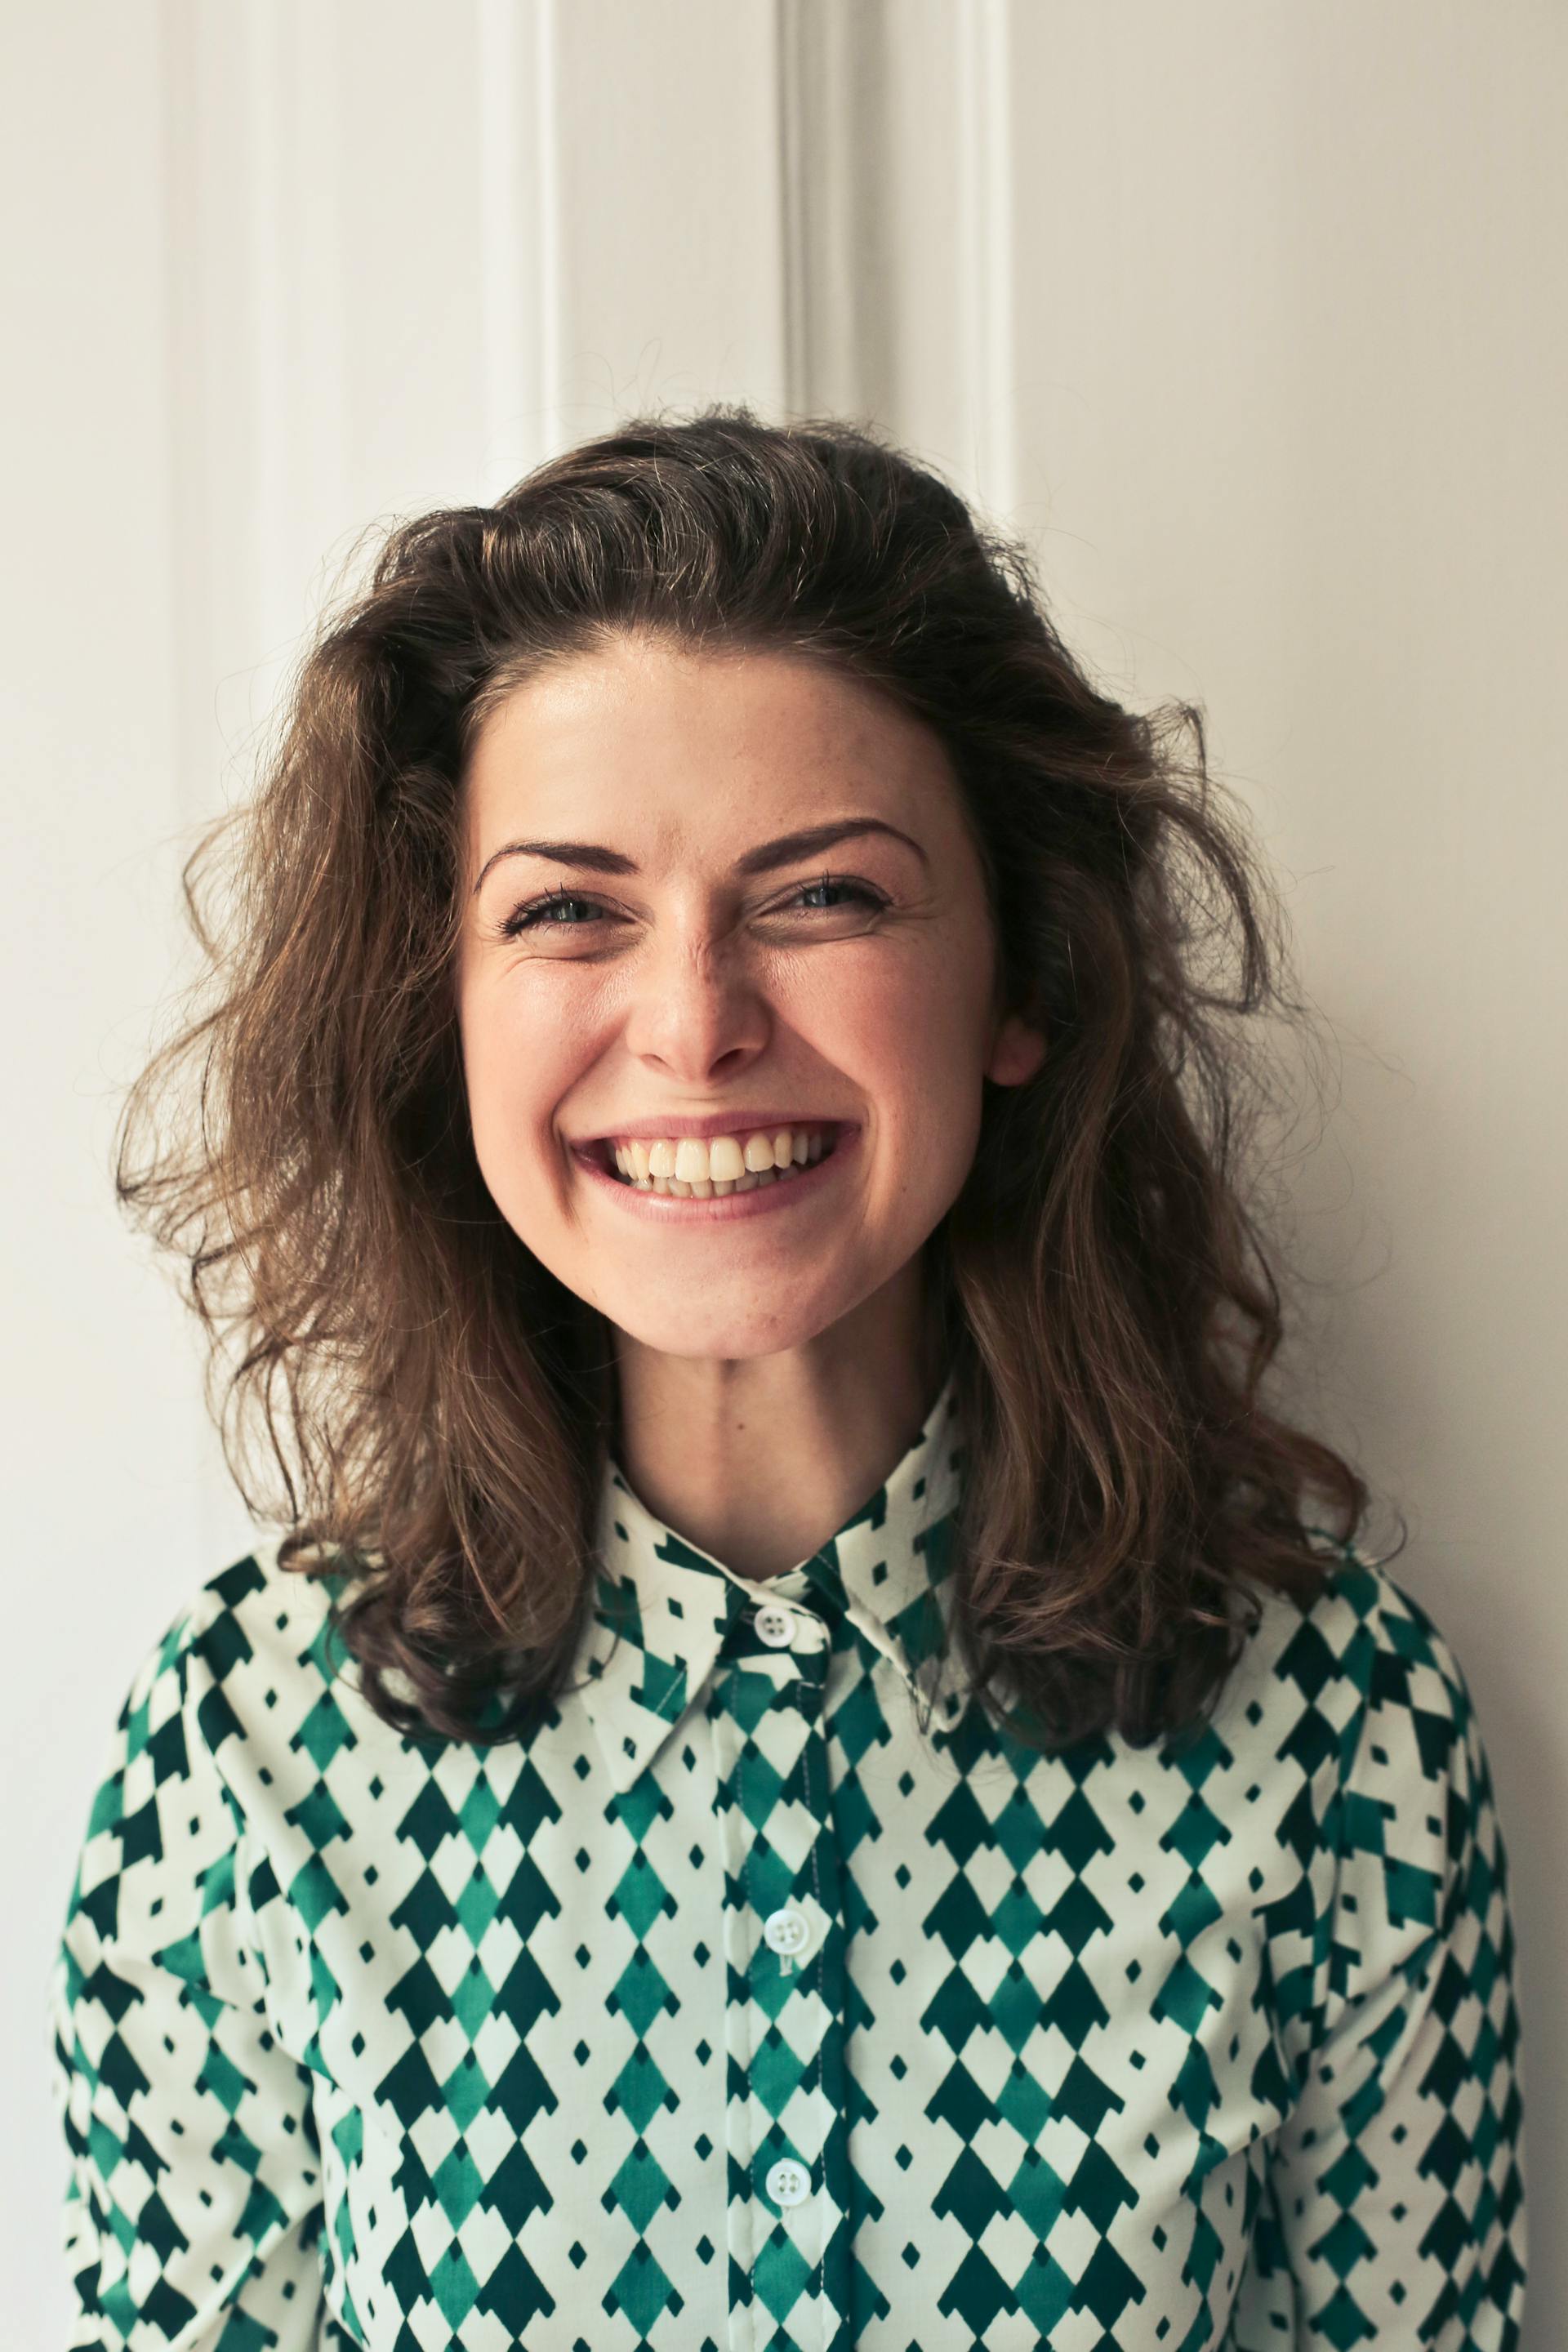 A smiling woman | Source: Pexels